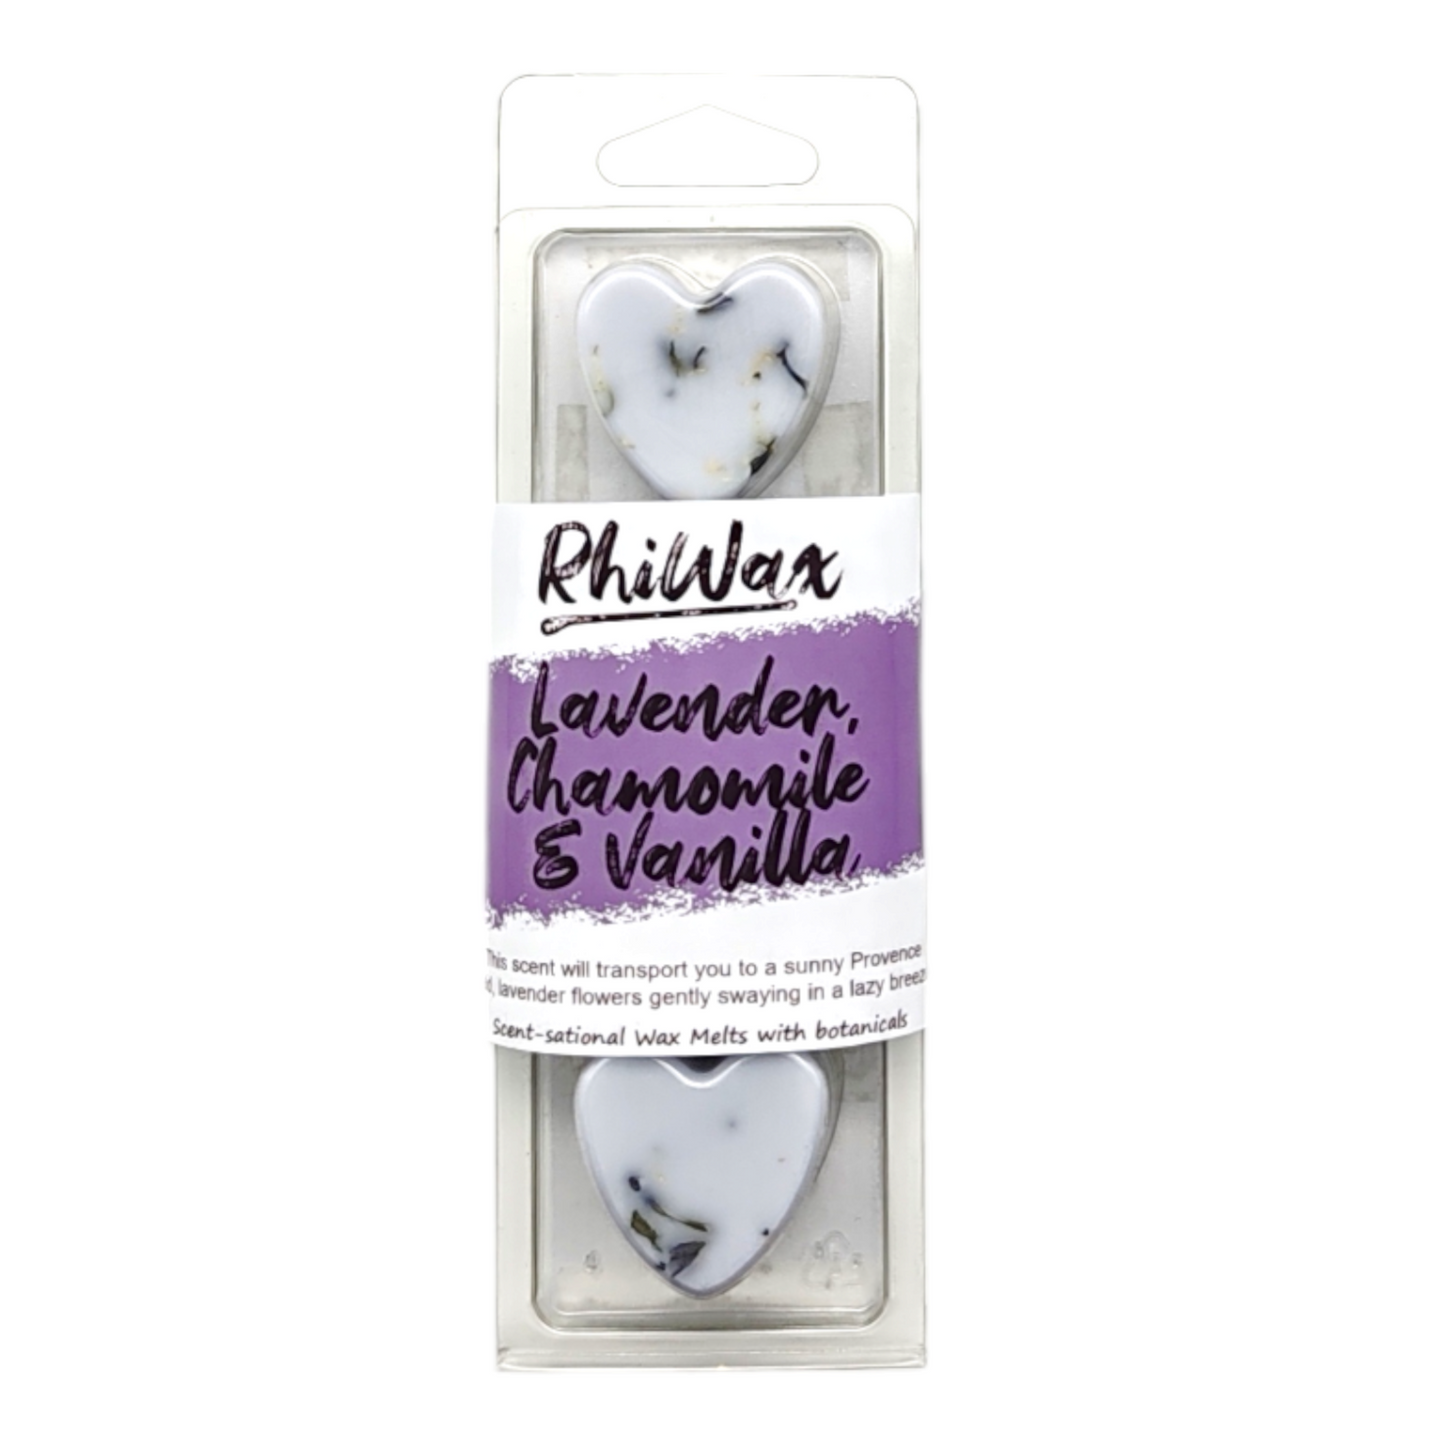 Lavender, Chamomile & Vanilla Wax Melts with Botanicals